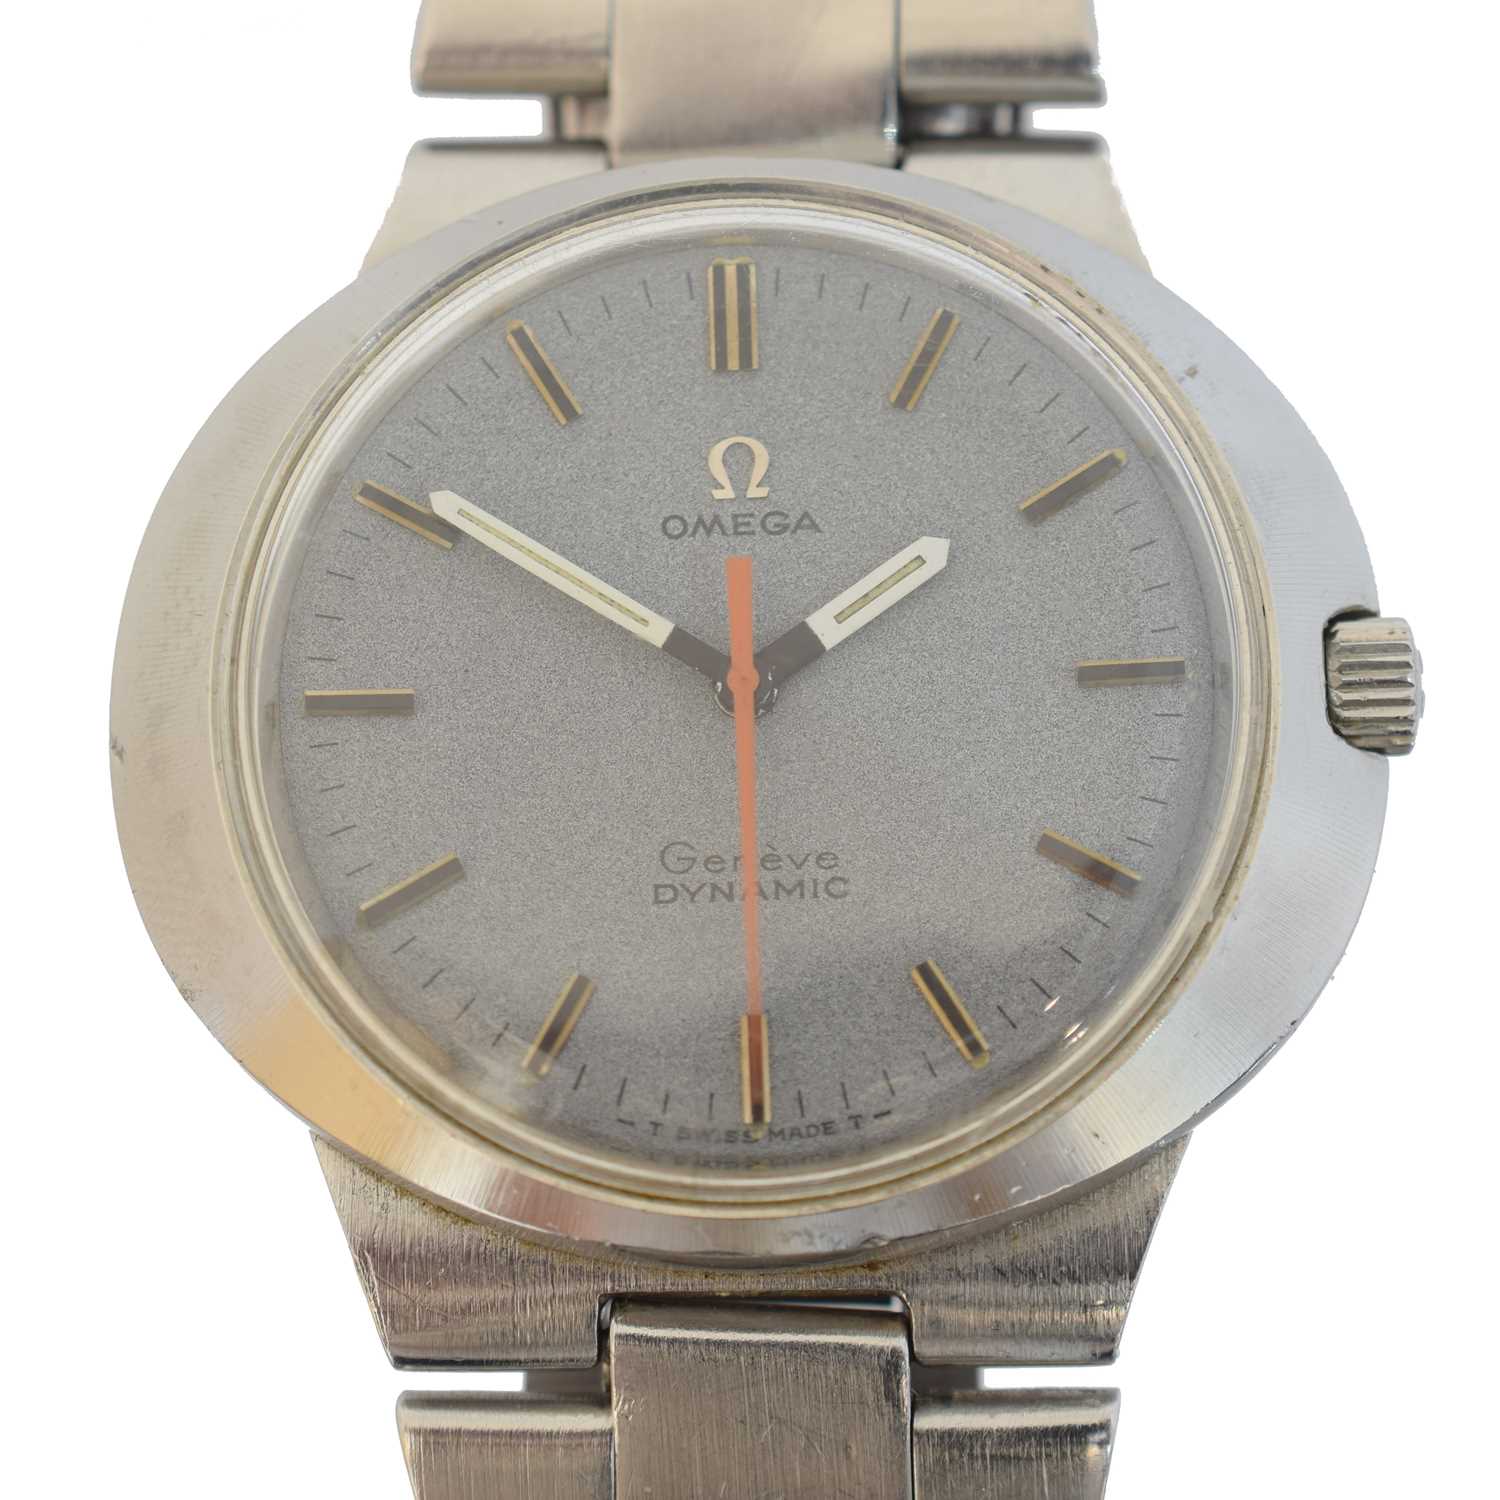 An Omega Geneve Dynamic wristwatch,